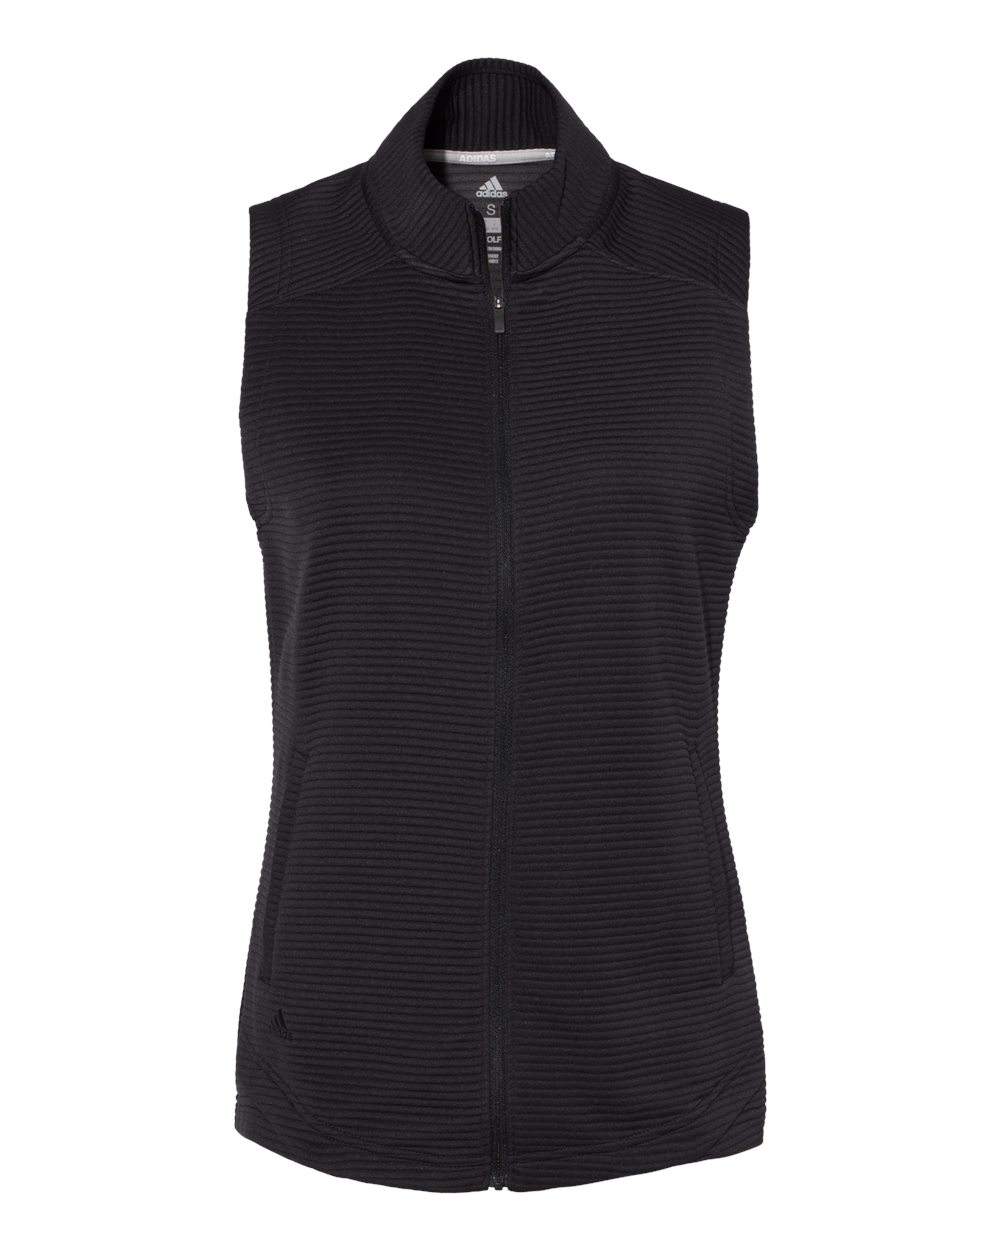 Adidas A417 - Women's Lifestyle Textured Full-Zip Vest